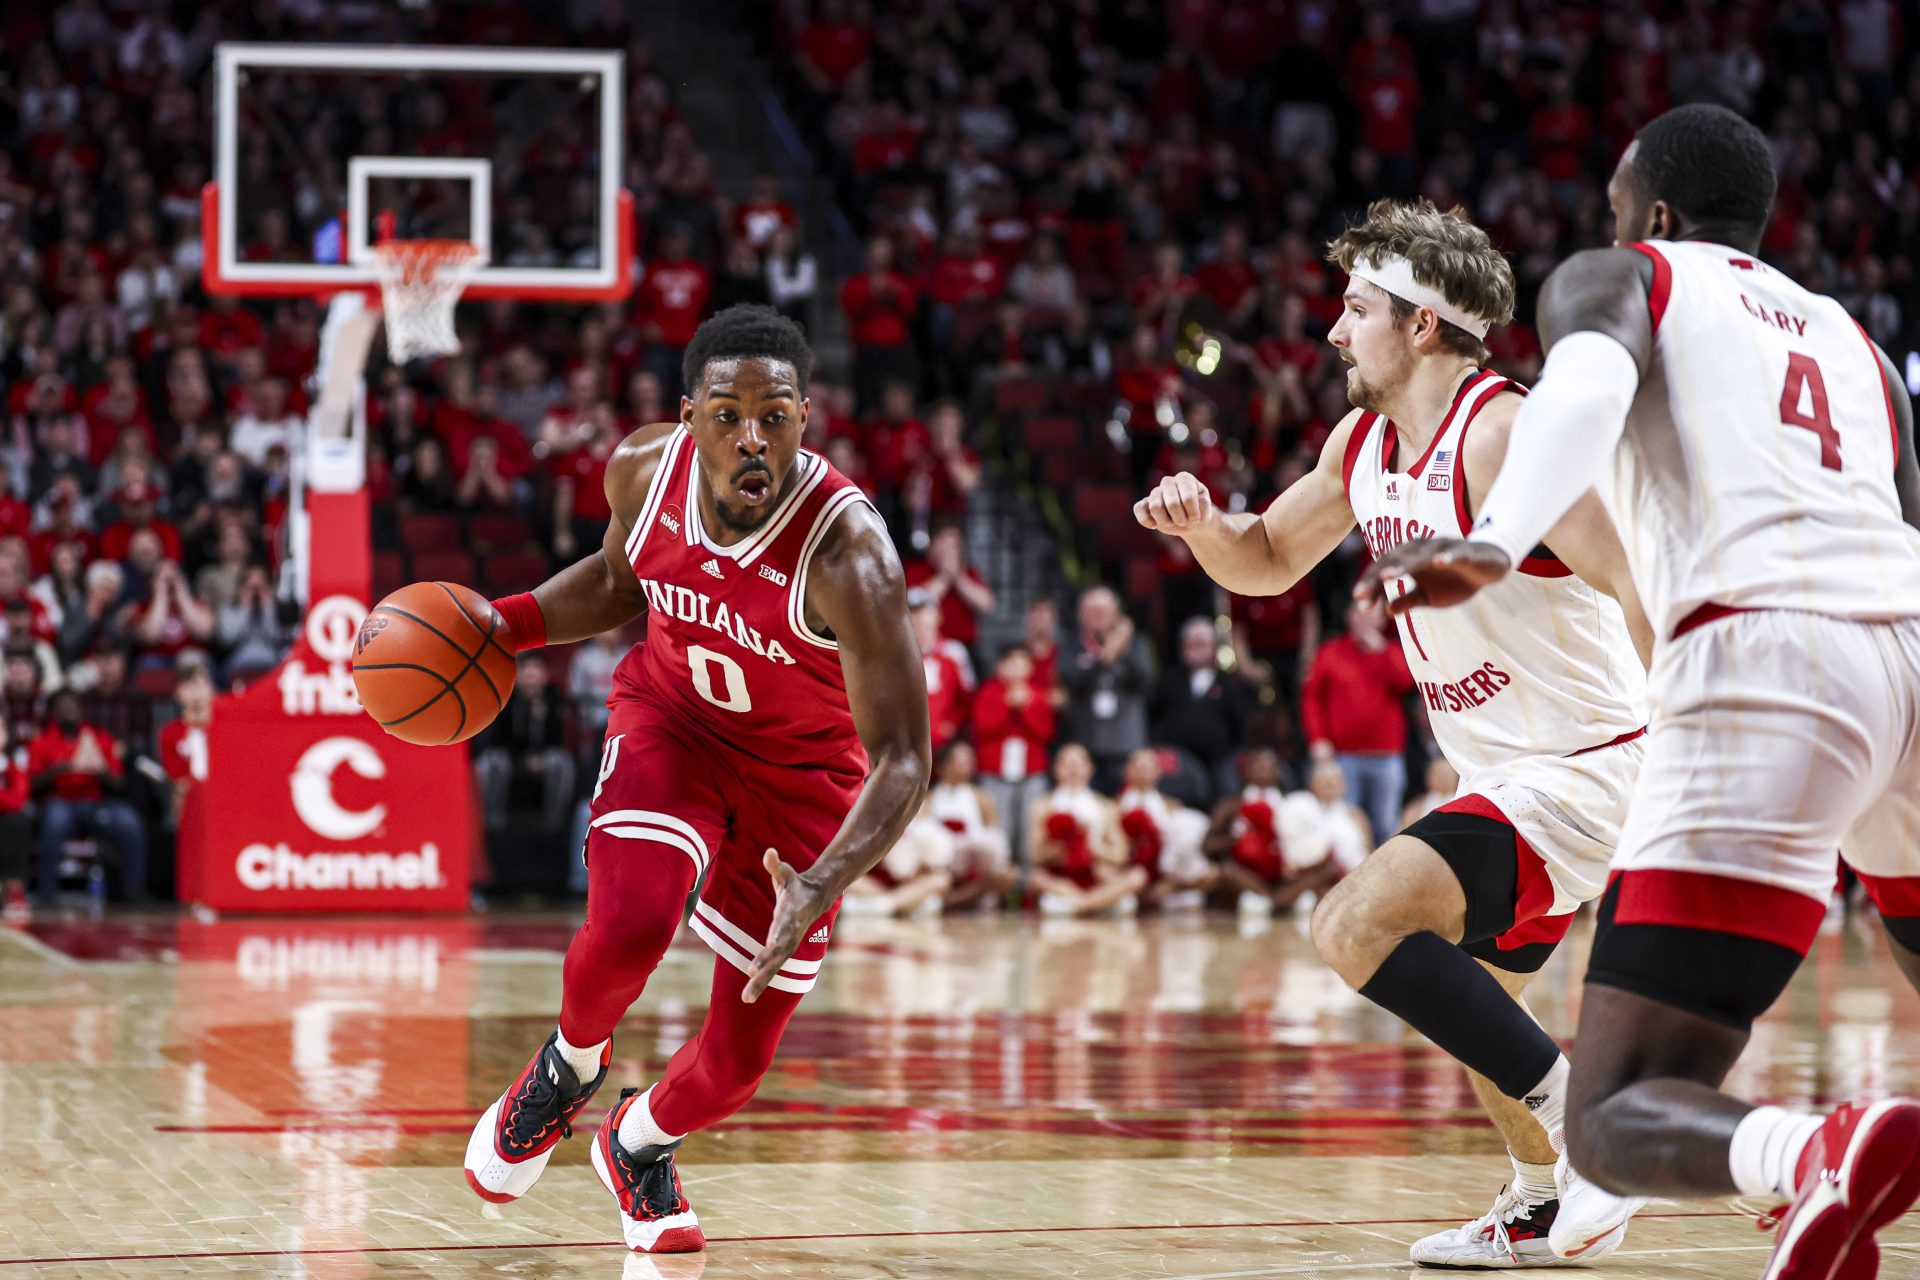 IU basketball: Indiana at Nebraska — The Report Card – The Daily Hoosier